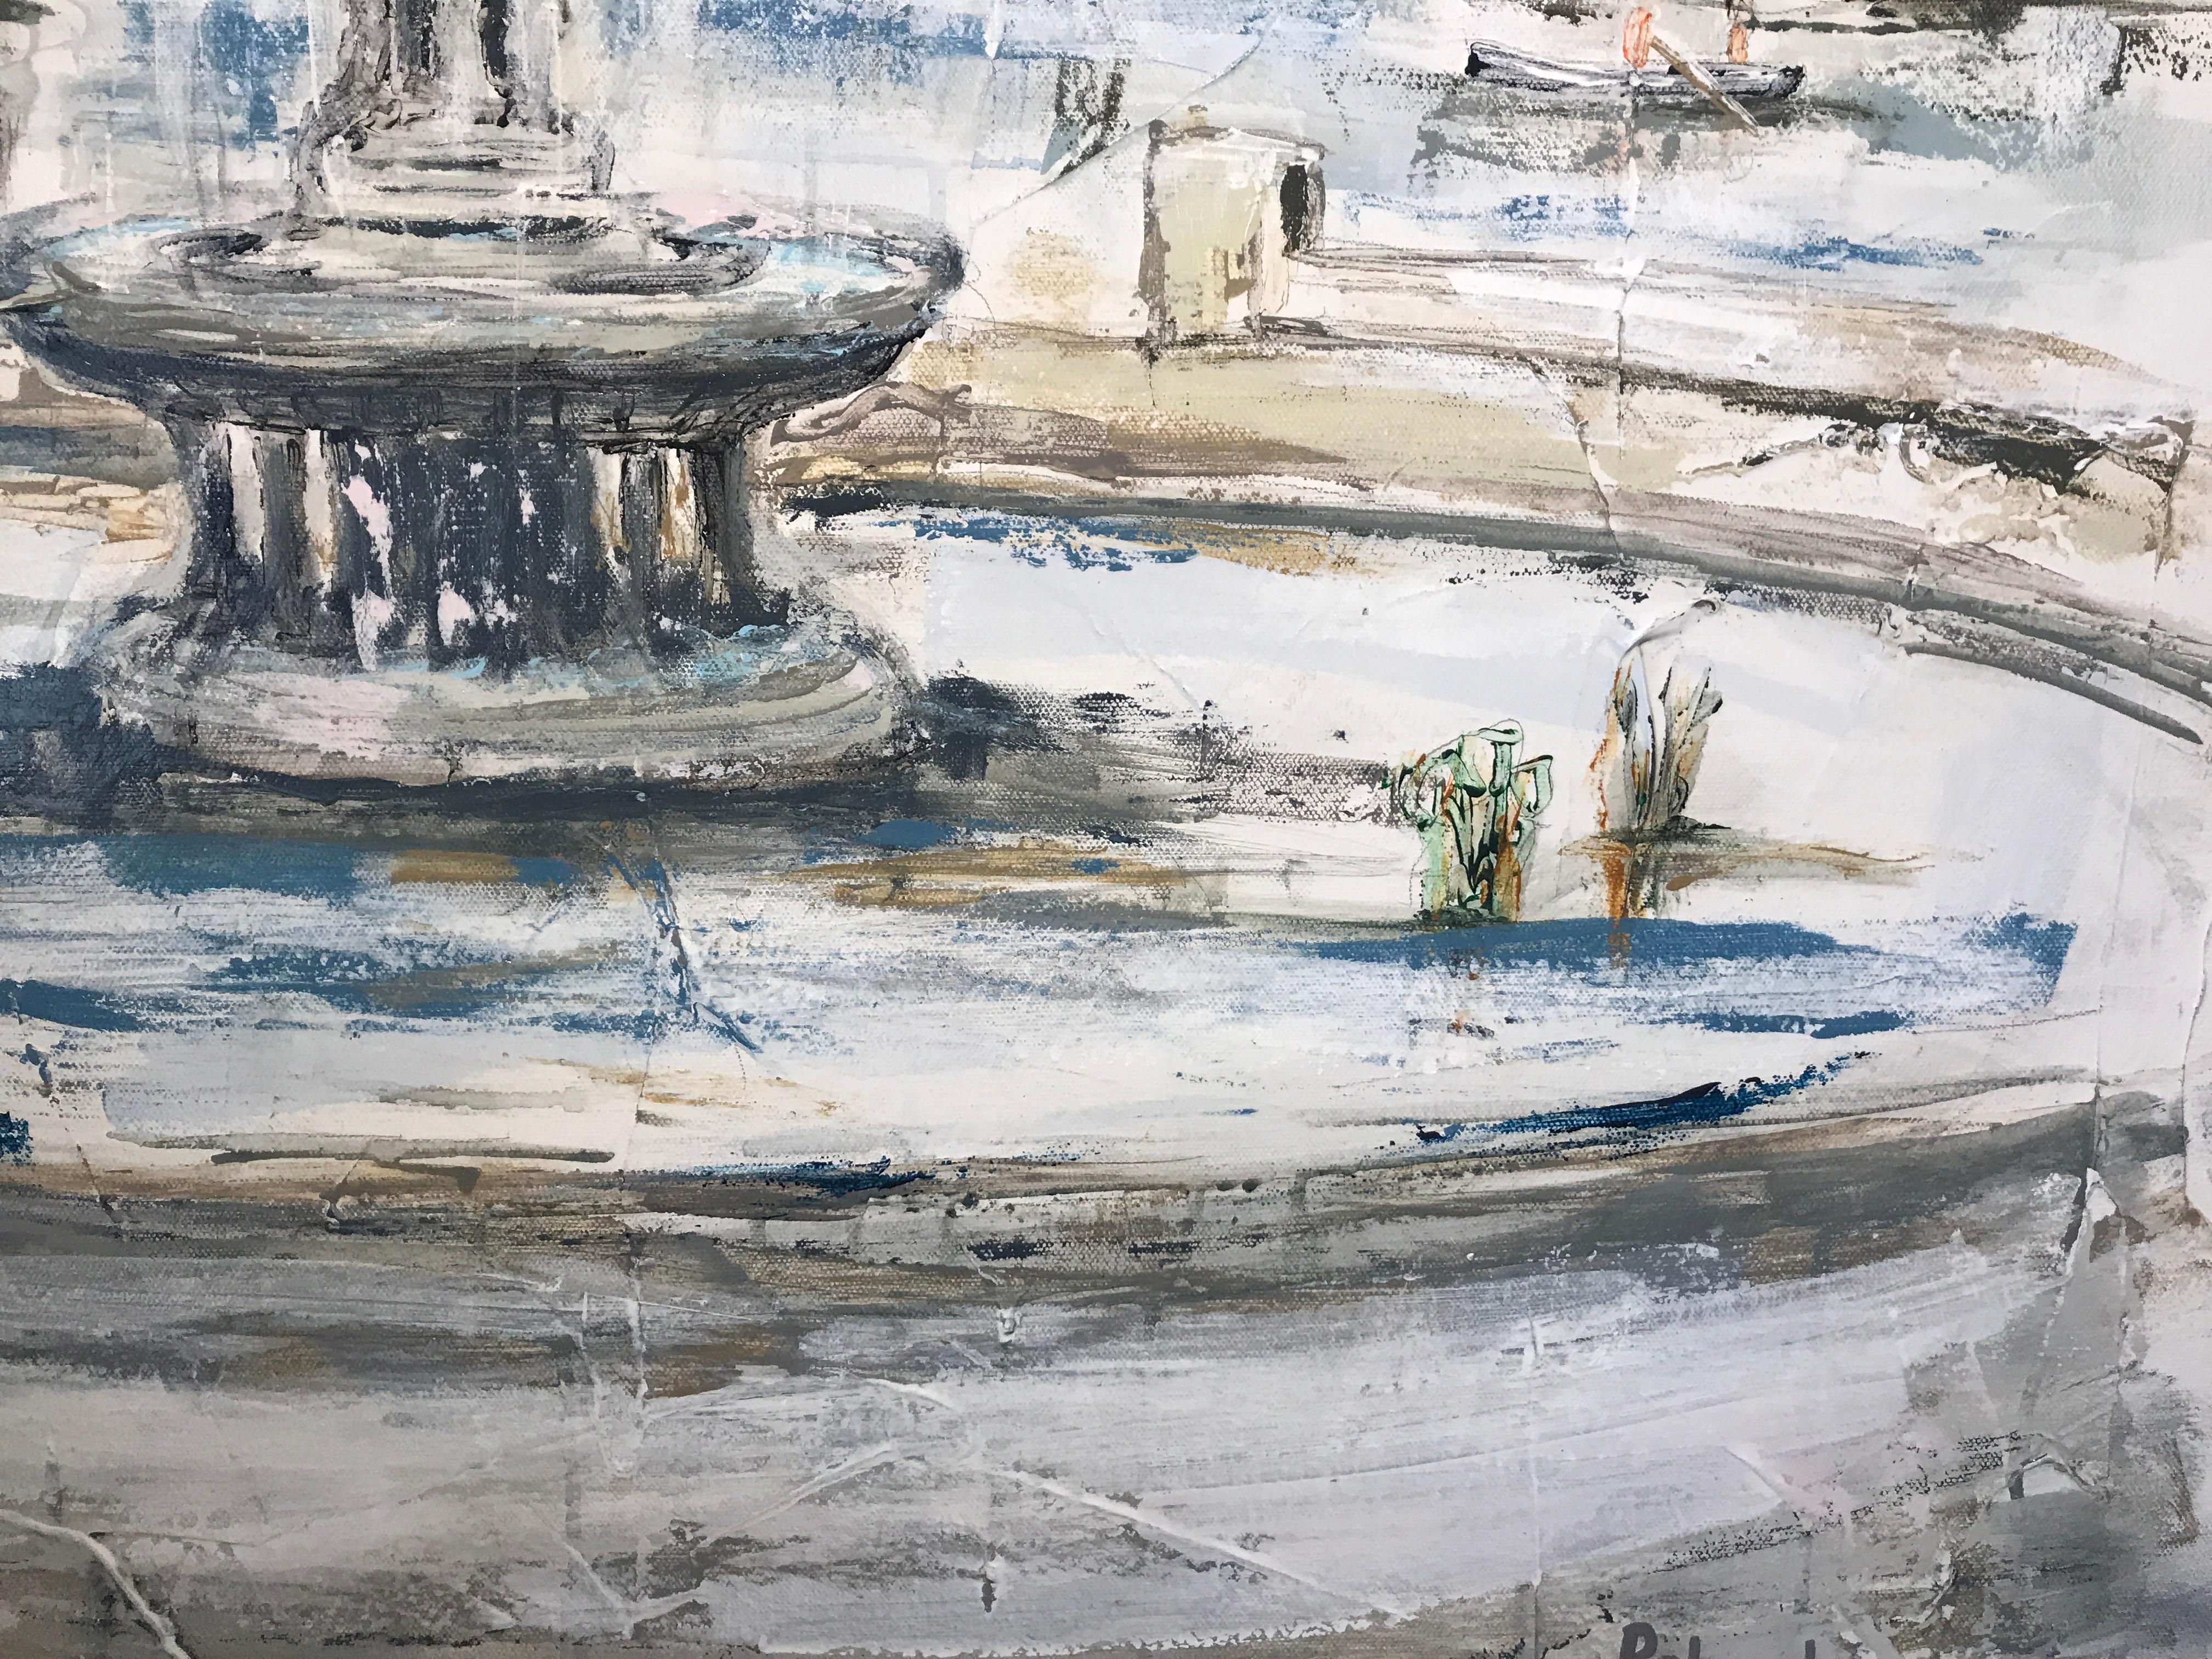 Bethesda Fountain/Central Park, Sarah Robertson Mixed Media on Canvas Painting 5